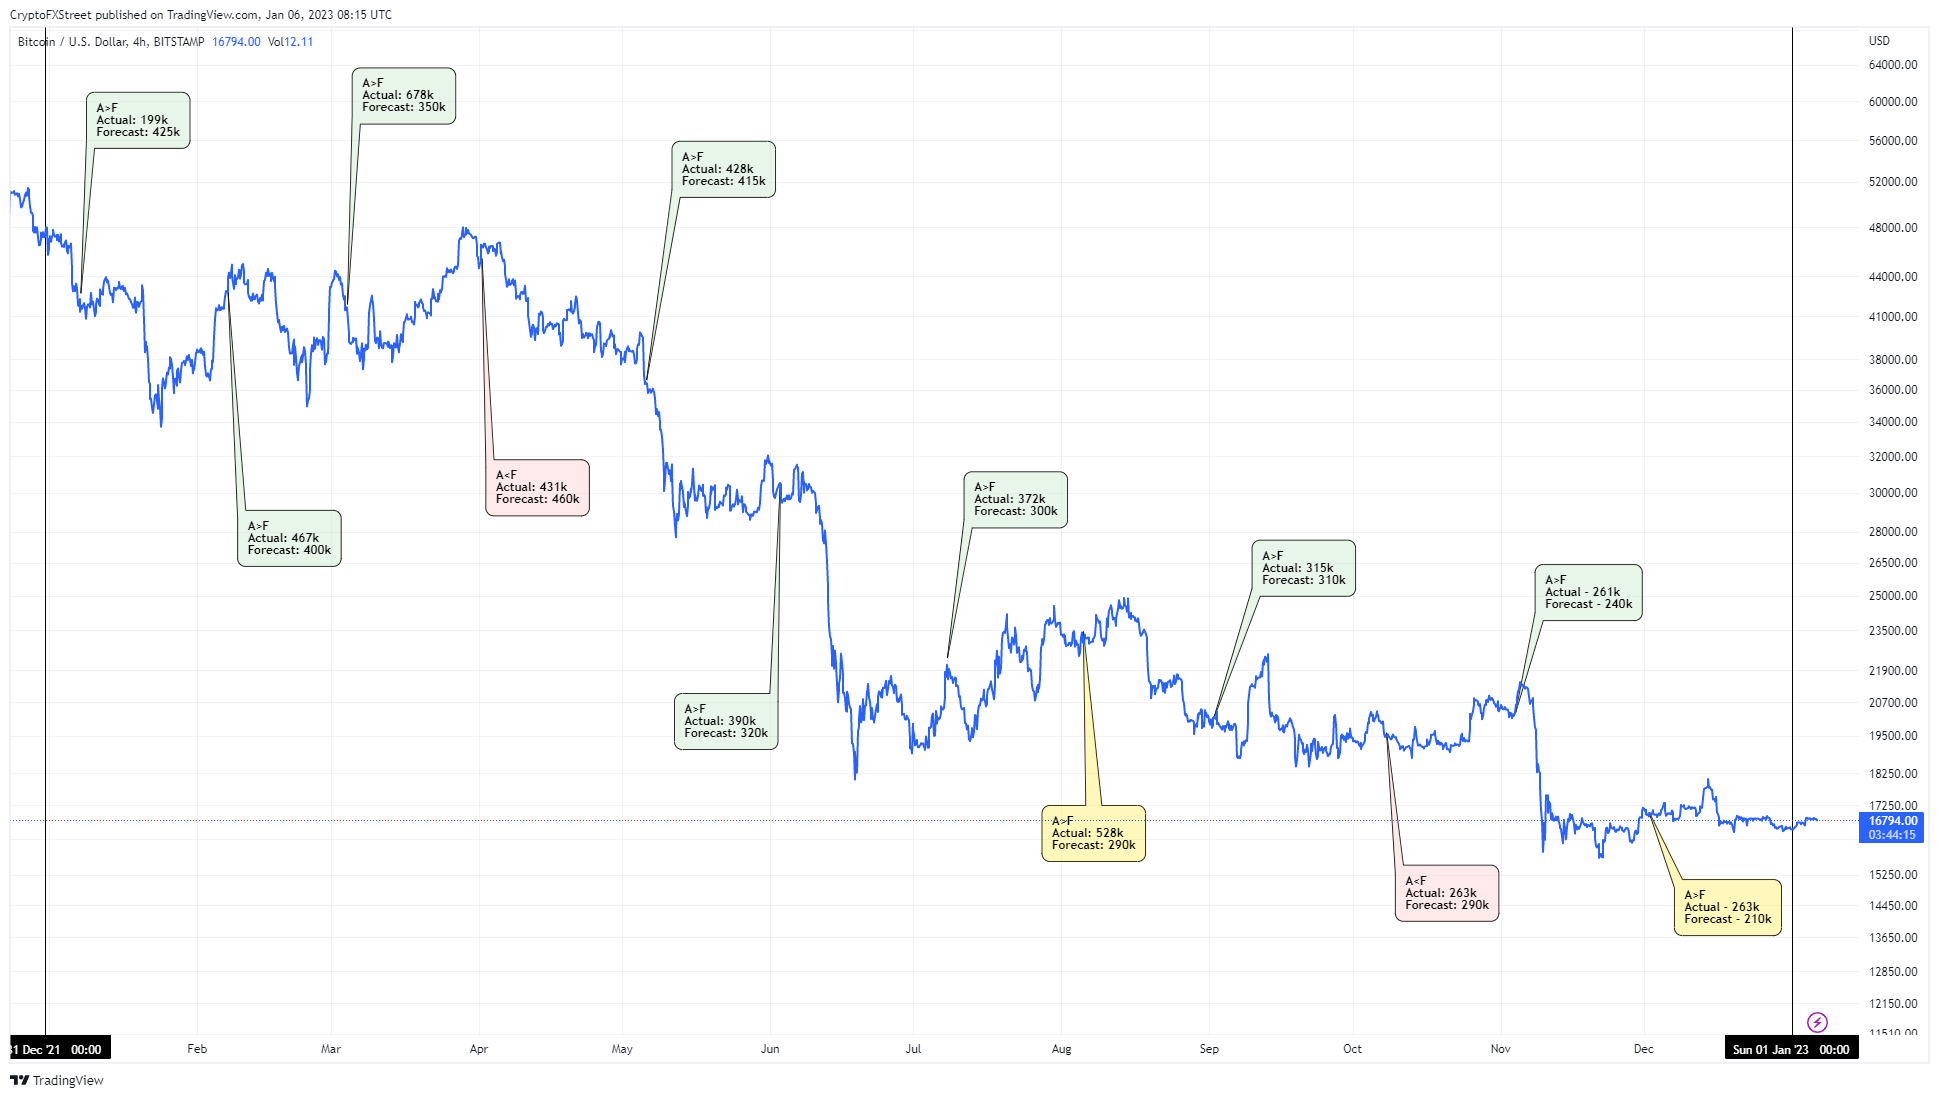 BTC/USD 4-hour chart vs. NFP